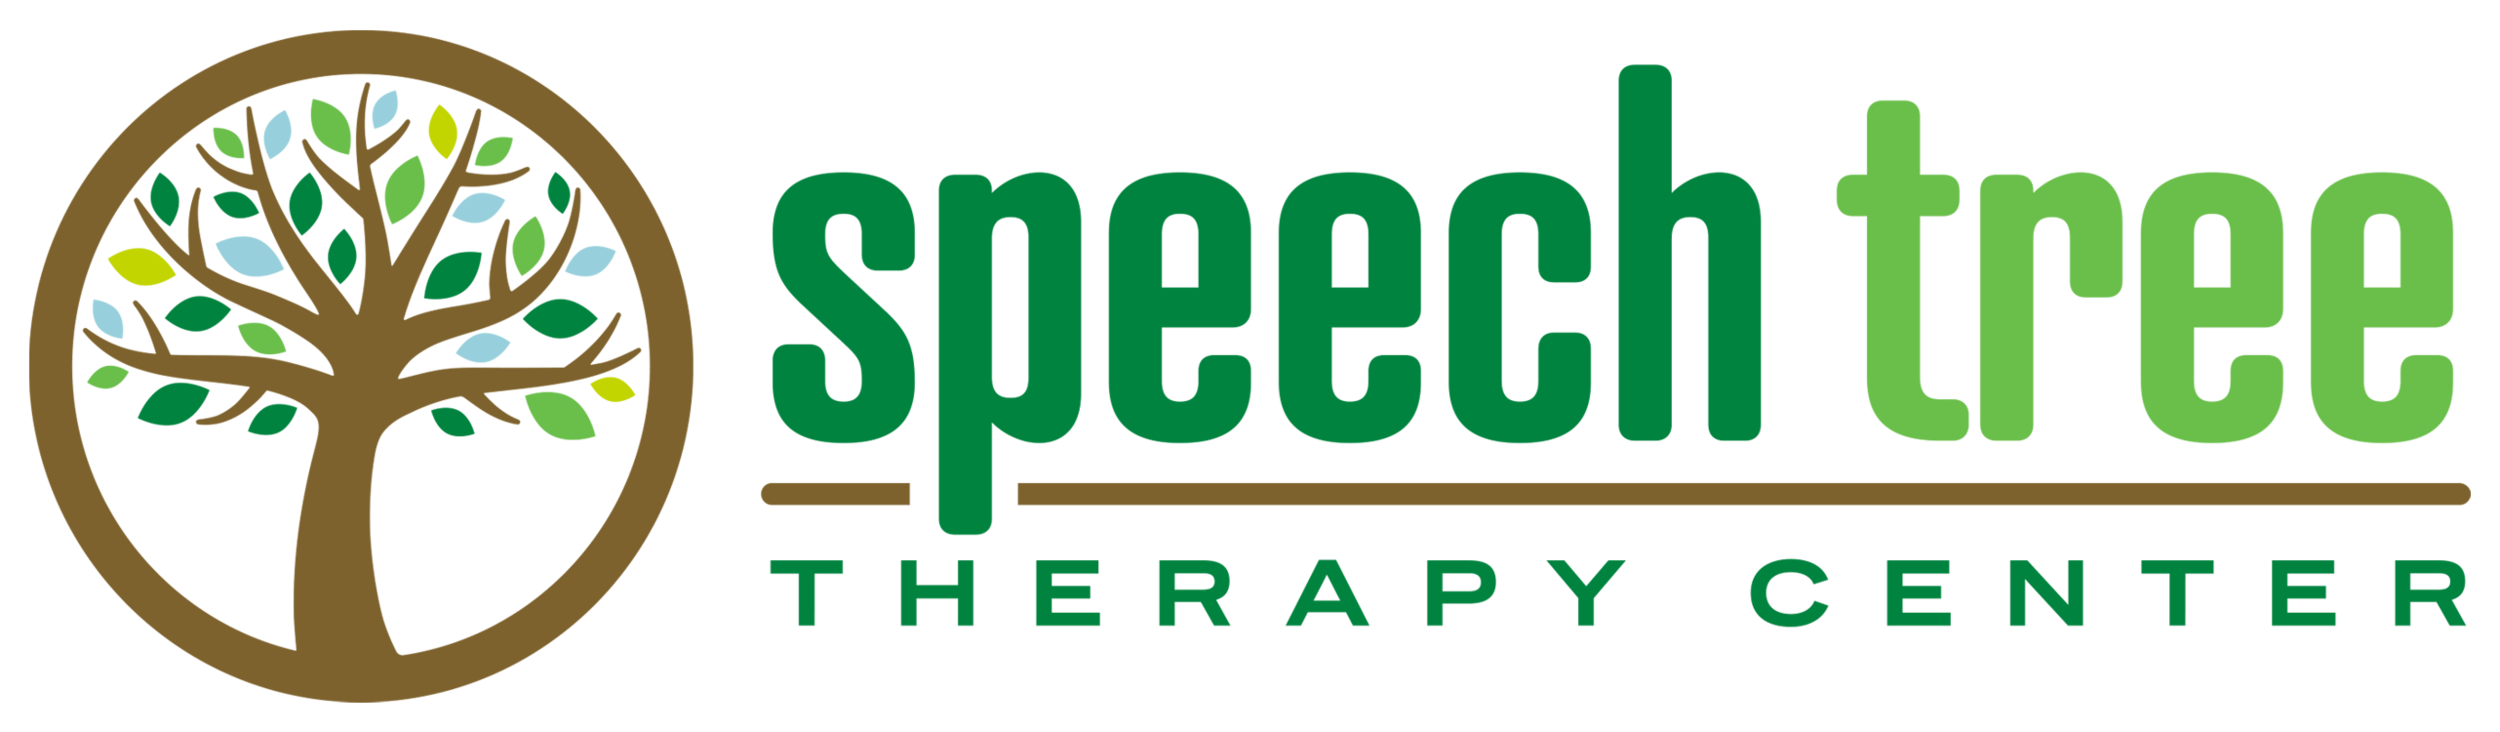 Speech Tree Therapy Center